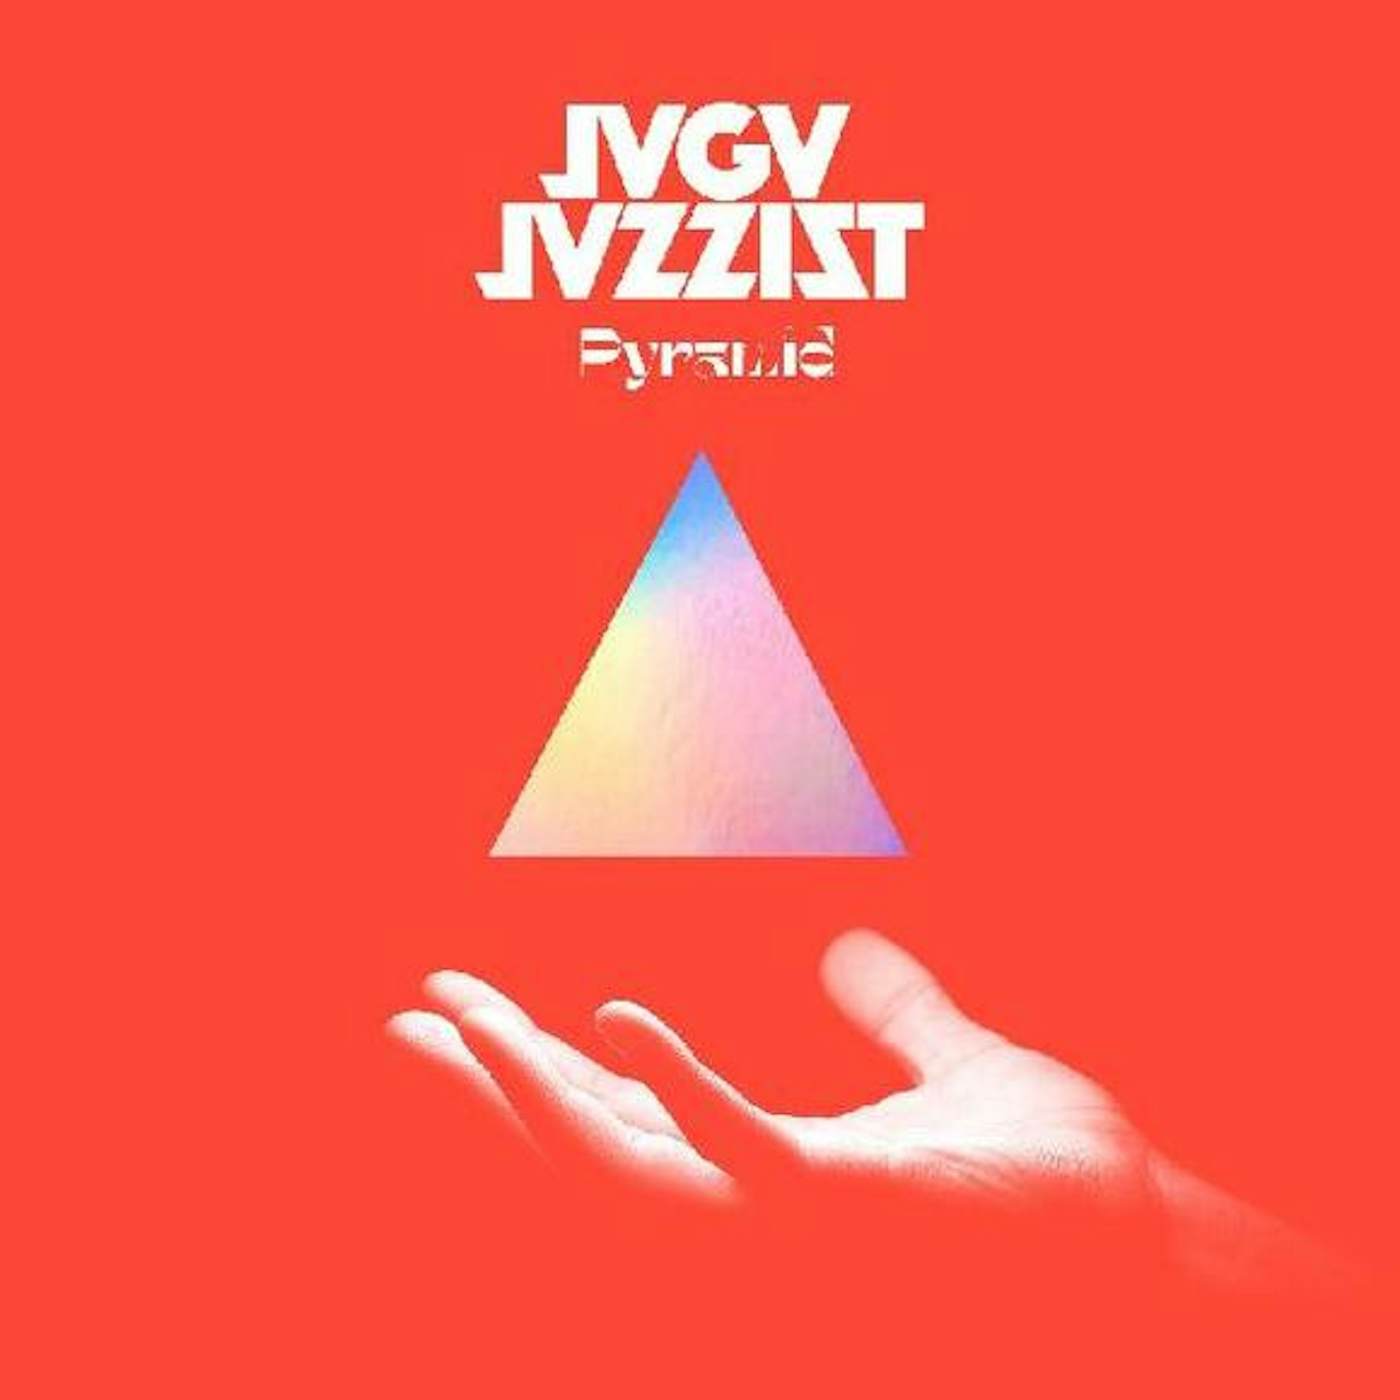 Jaga Jazzist PYRAMIND Vinyl Record